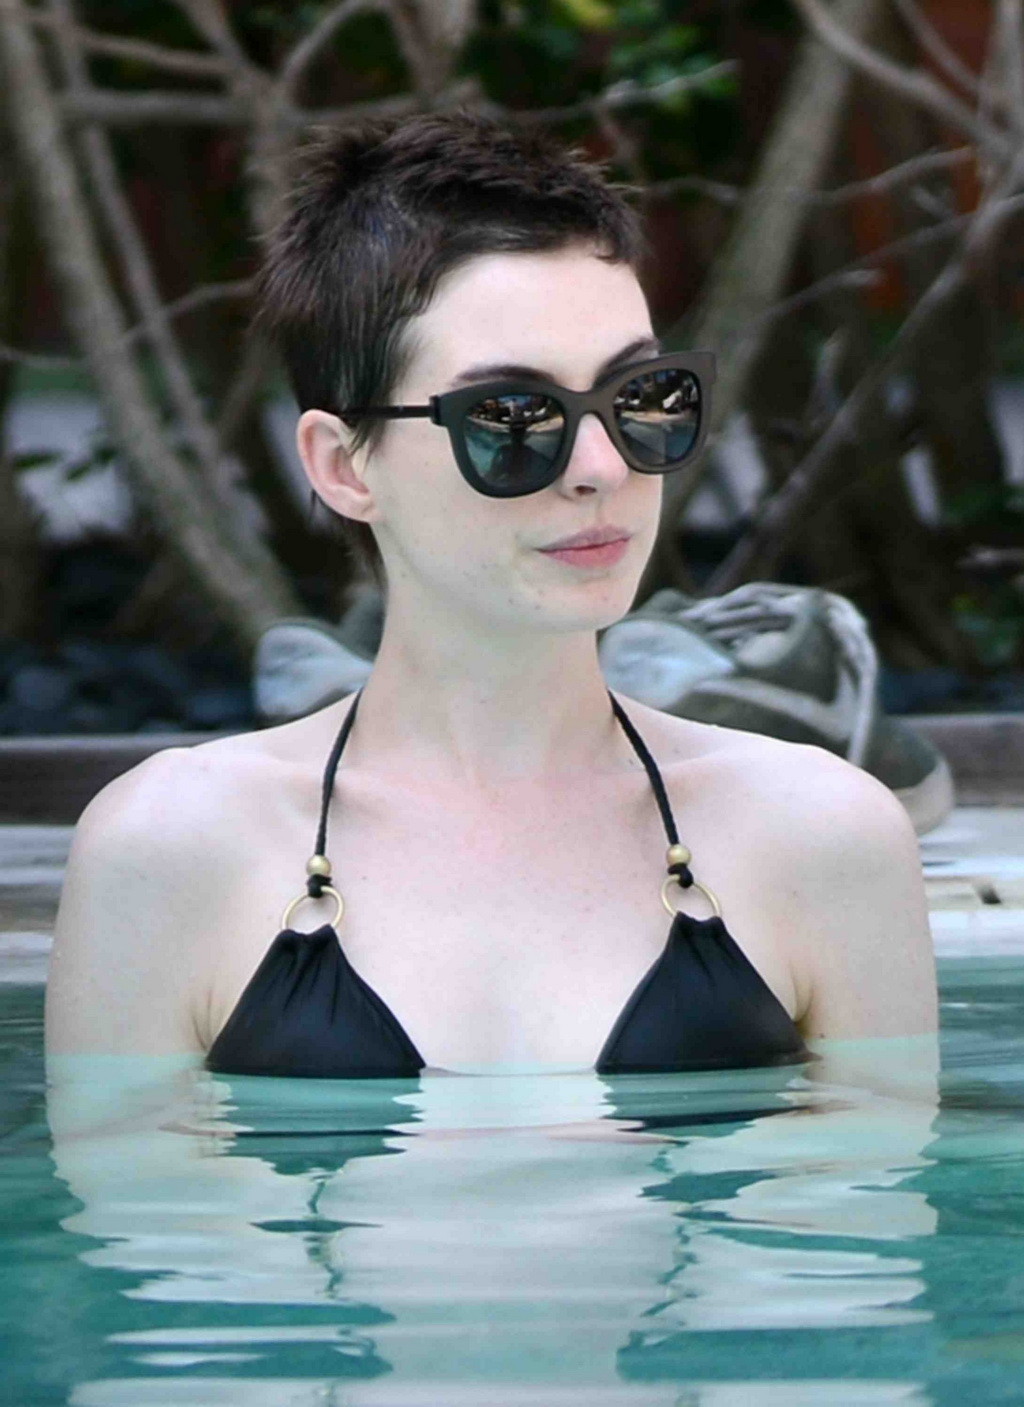 Anne hathaway luciendo bikini negro mojado en la piscina del hotel setai en miami
 #75247904